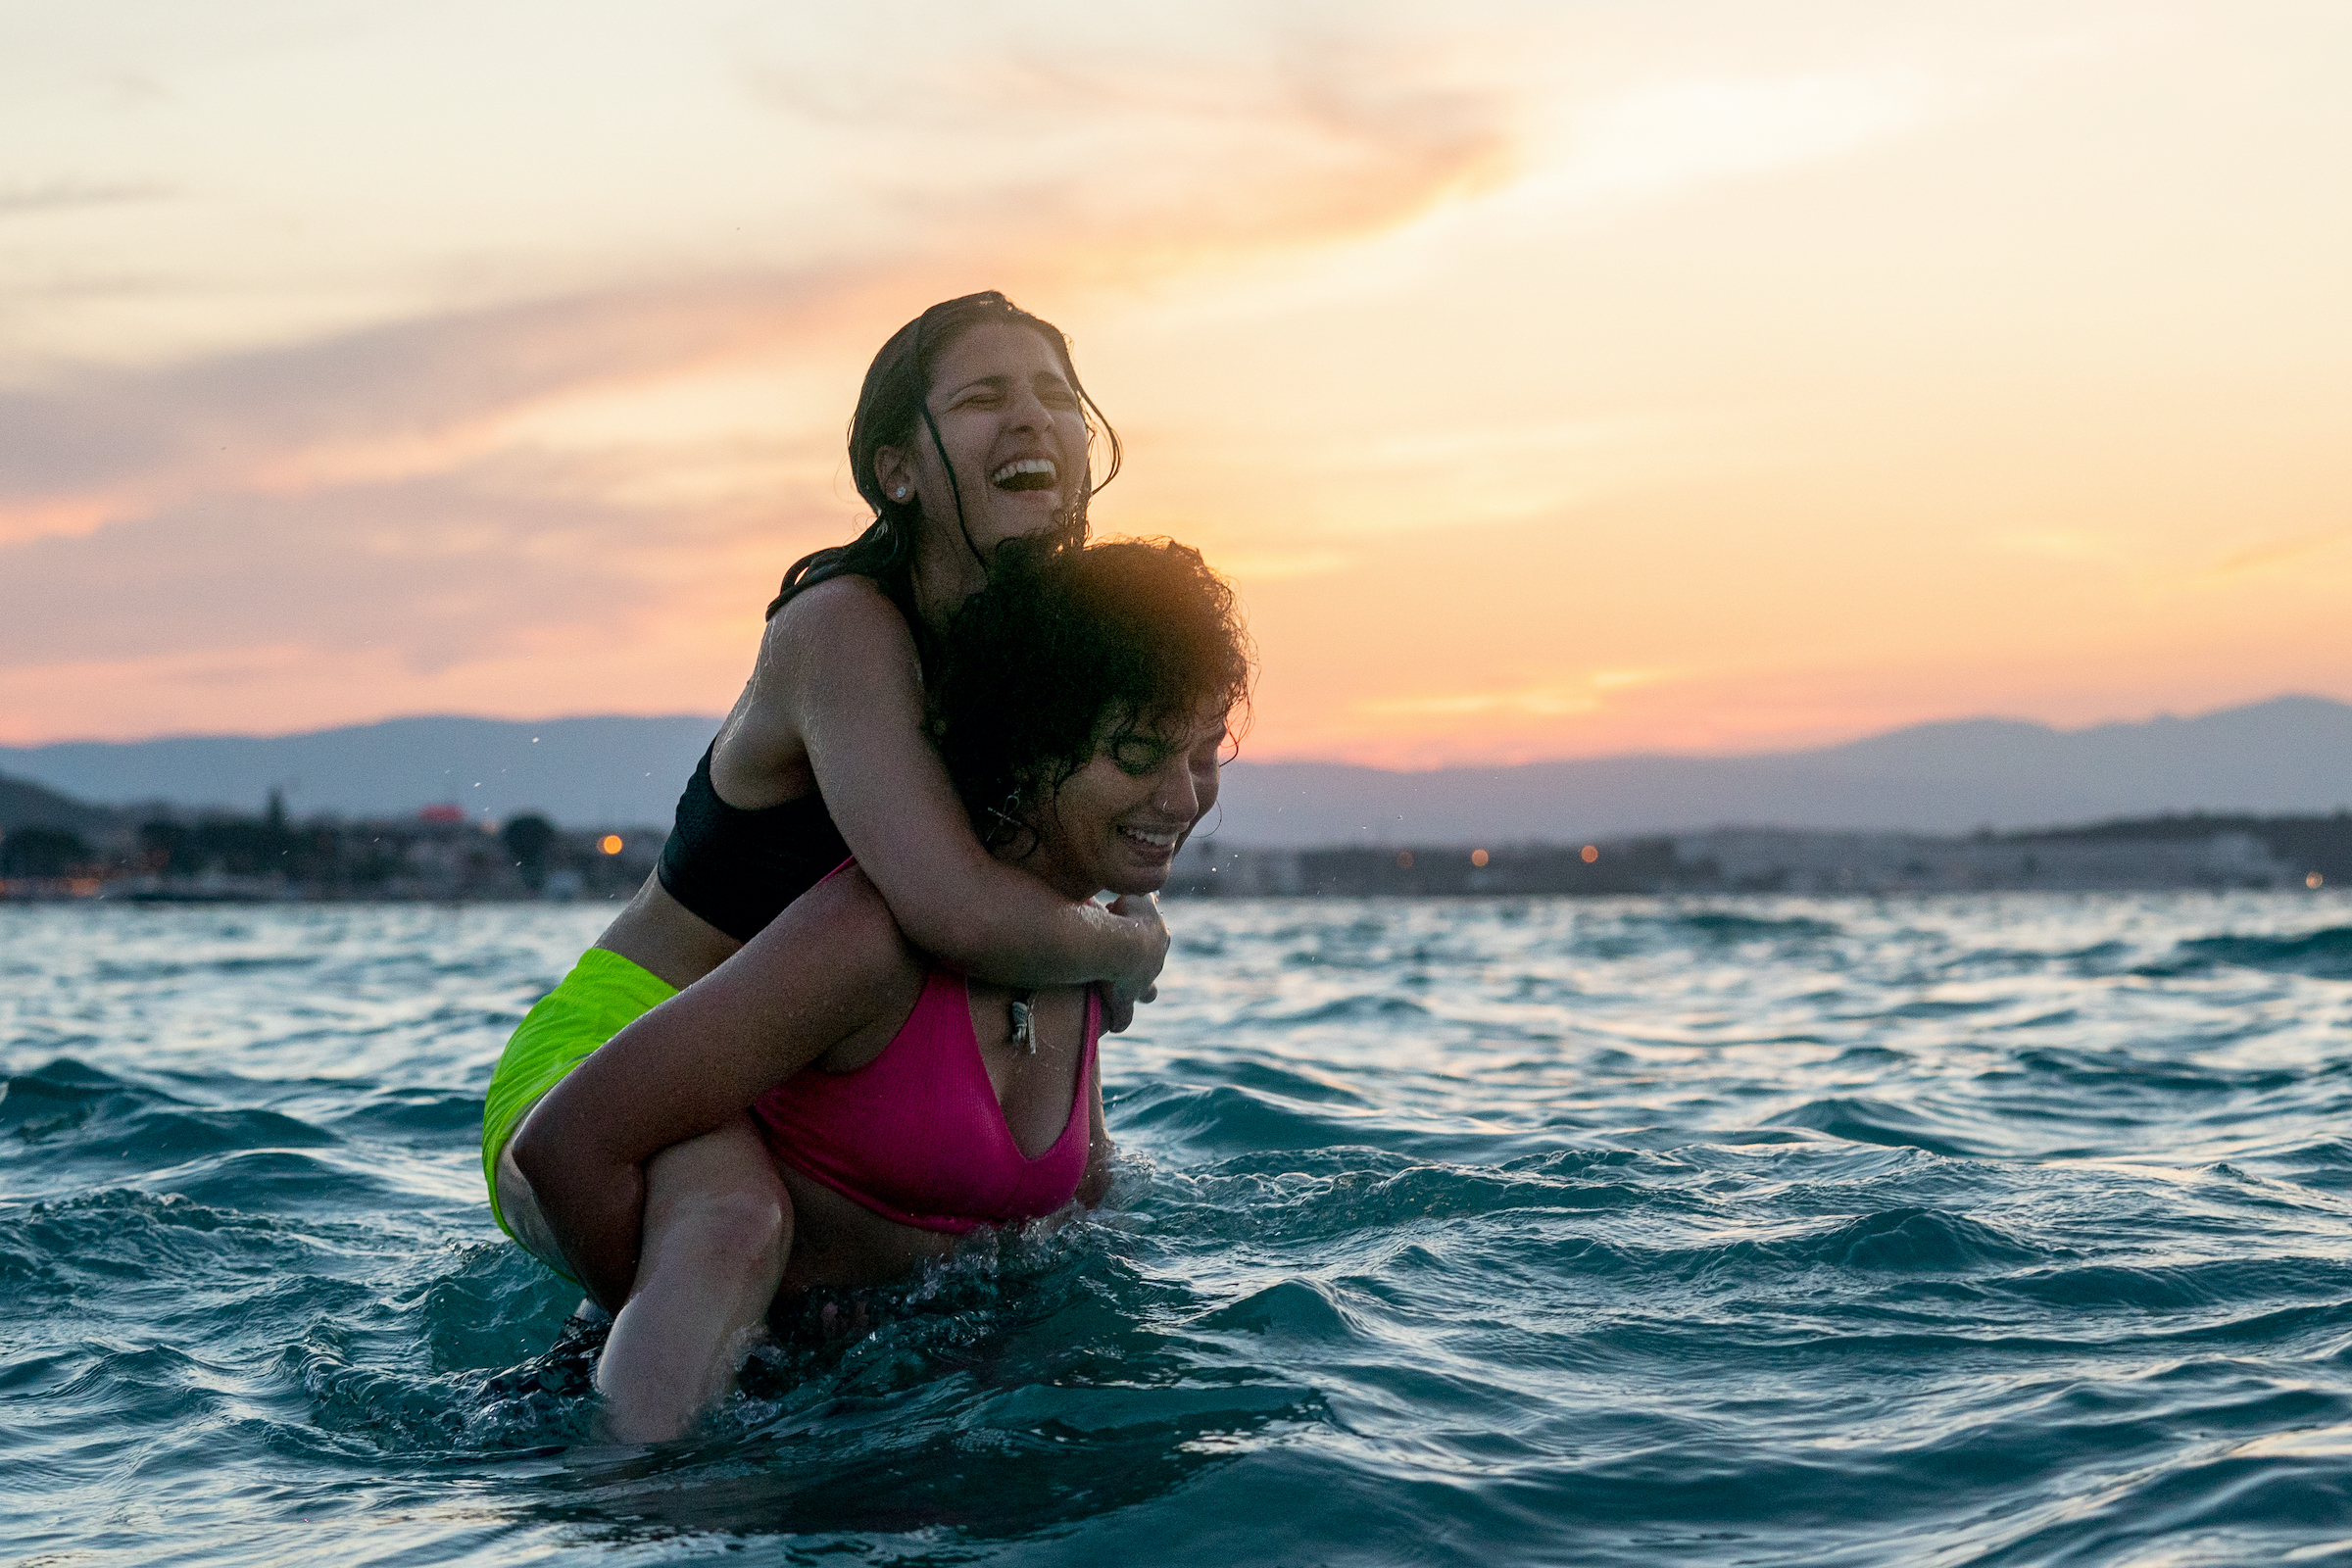 Natalie Issa as Yusra Mardini and Manal Issa as Sarah Mardini in The Swimmers (Laura Radford/Netflix)